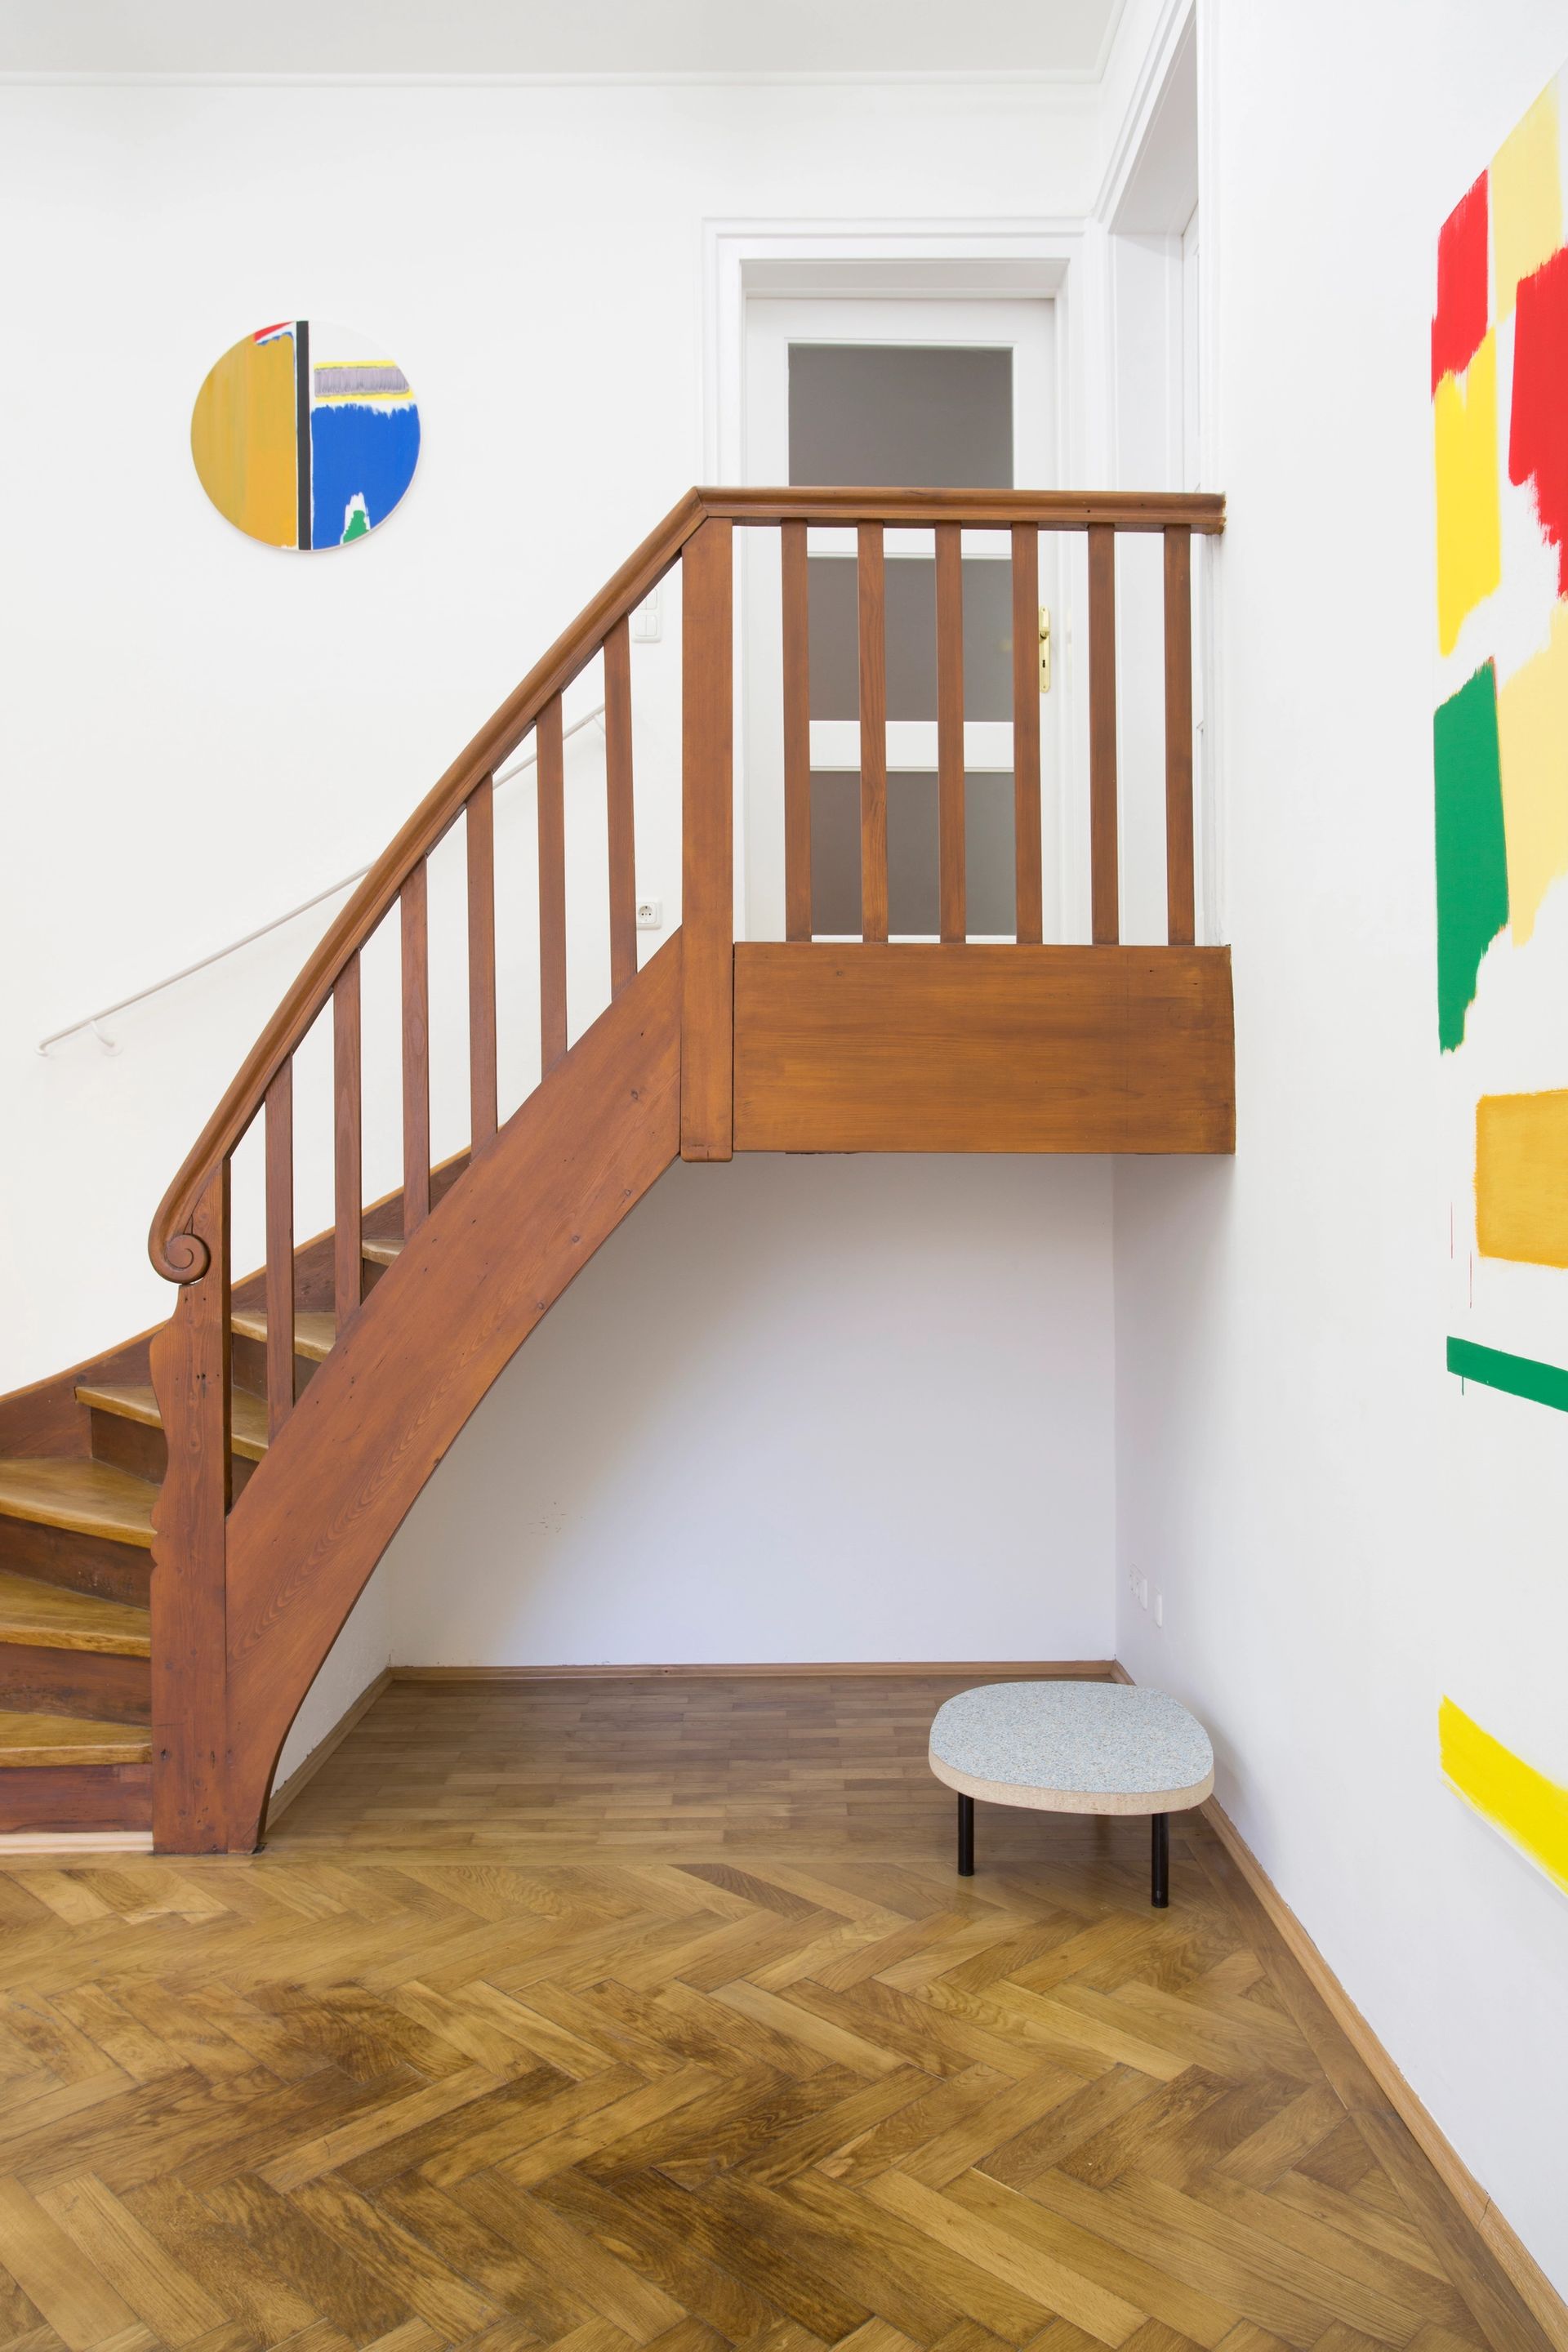 Installation view: Elvire Bonduelle, “waiting room #4”, 2015  (Bernard Piffaretti, Elvire Bonduelle)